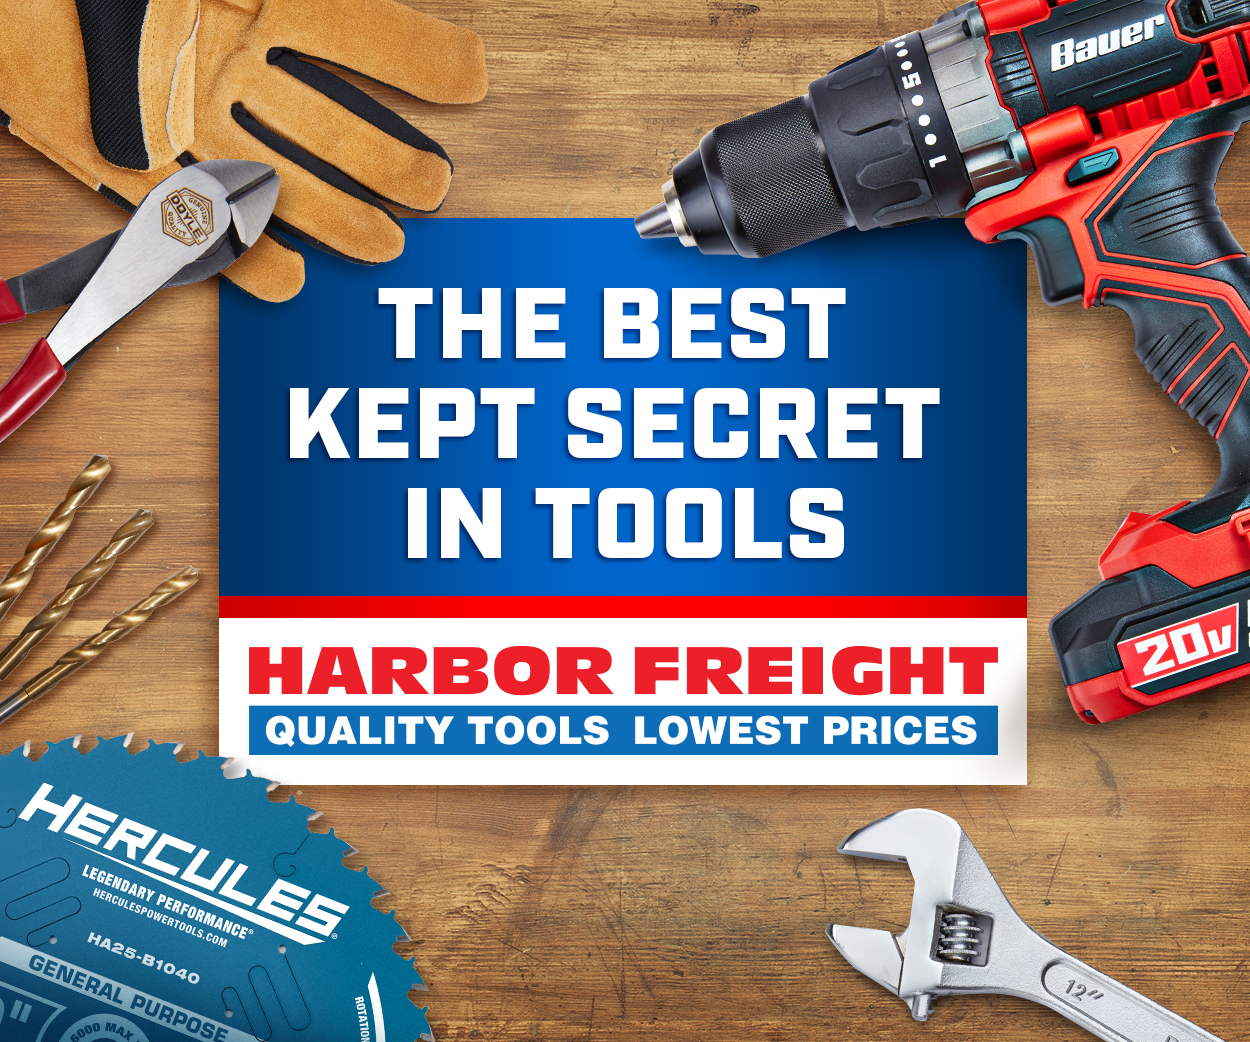 Harbor freight Tools. Harbor freight. Гавани инструмент. Sell tools